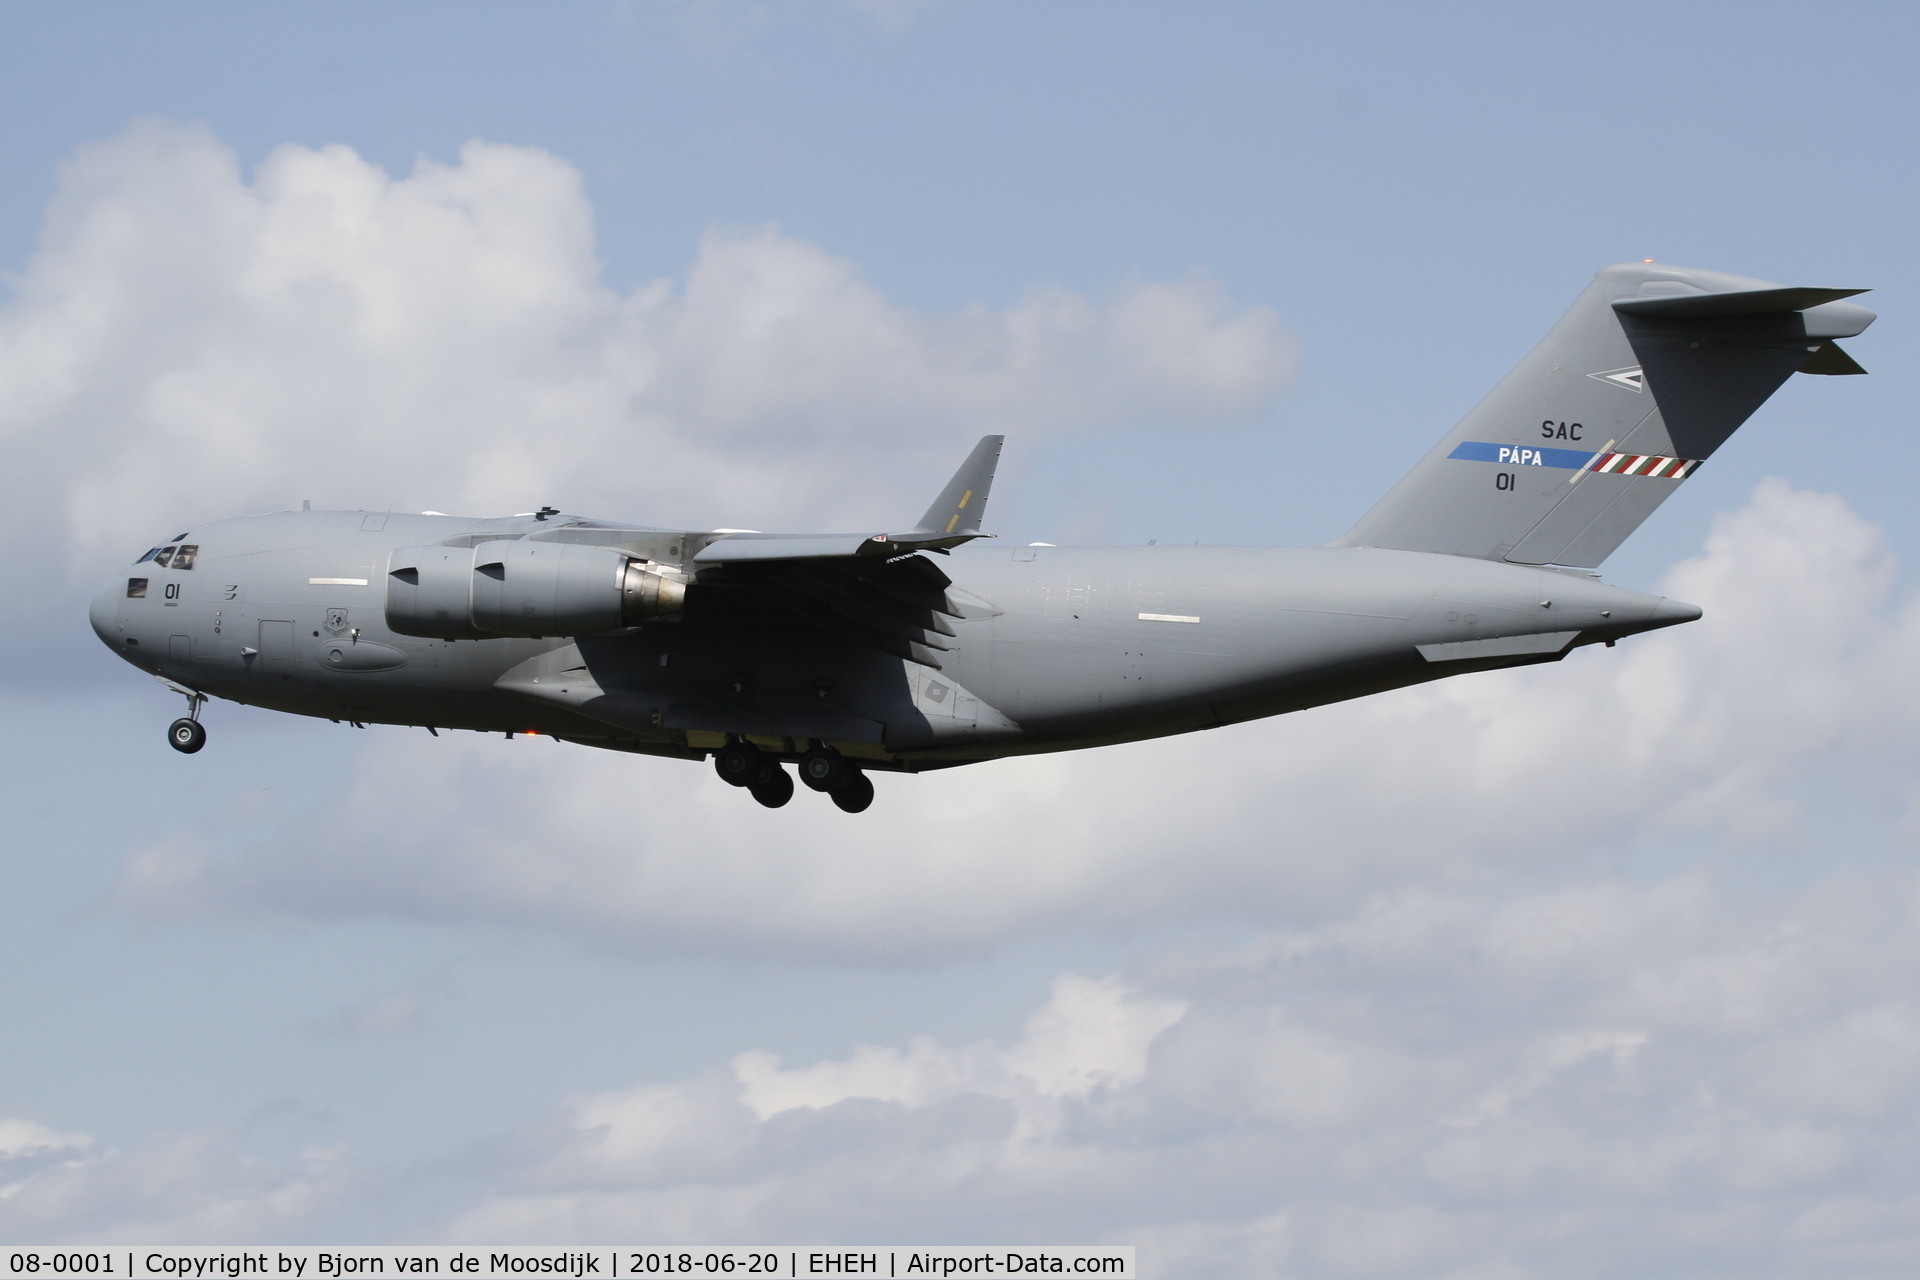 08-0001, 2008 Boeing C-17A Globemaster III C/N F-207, 08-0001 Landing at Eindhoven Airbase